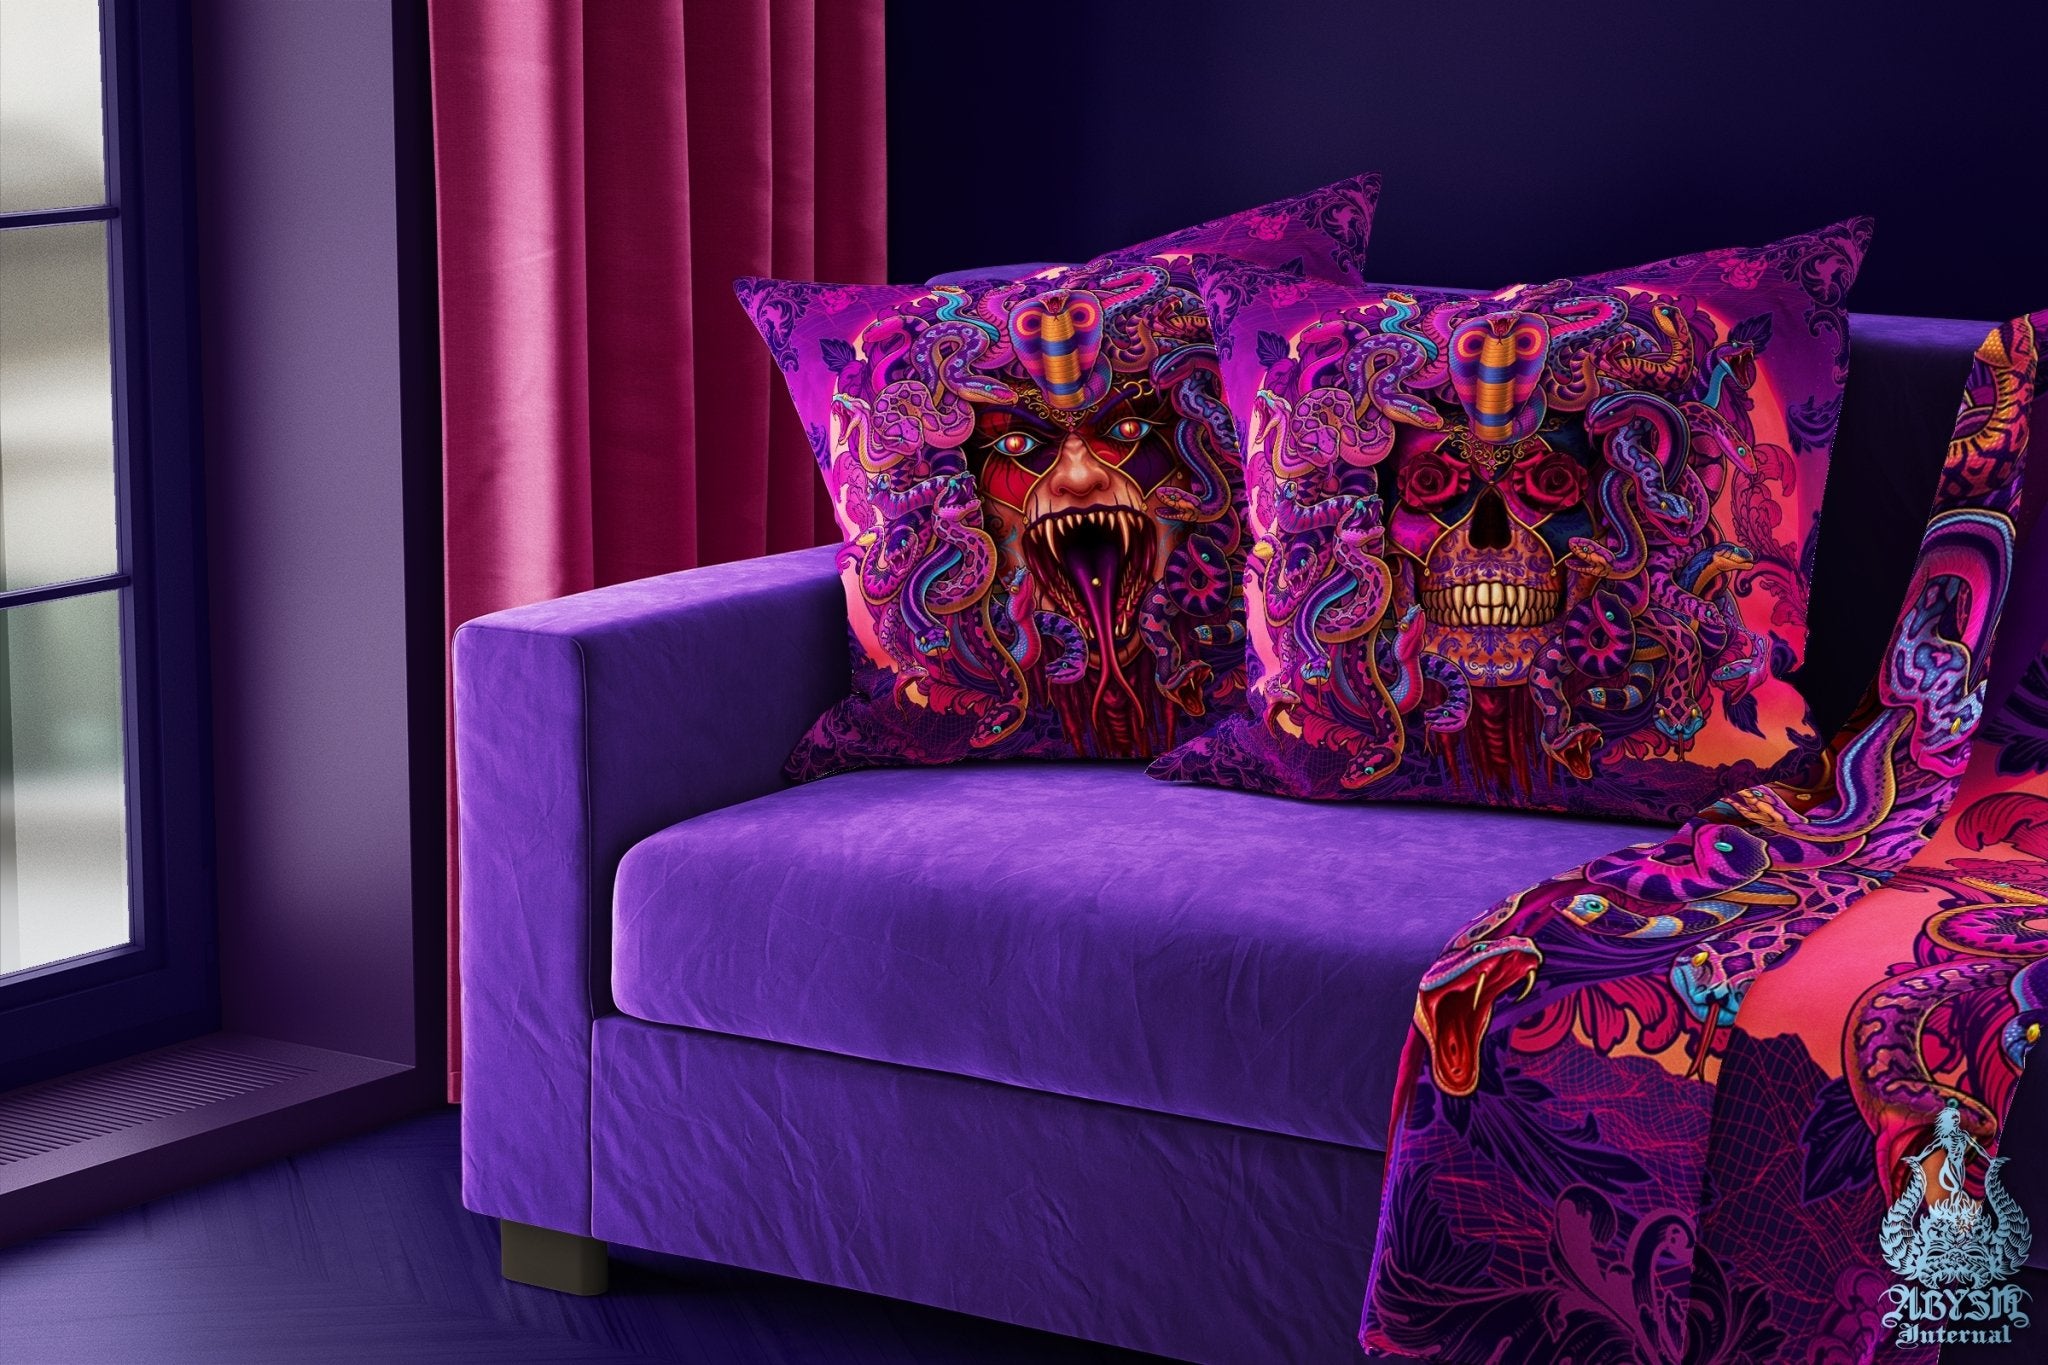 Psychedelic Throw Pillow, Vaporwave Decorative Accent Cushion, Retrowave 80s Room Decor, Synthwave Art Print - Medusa Rage - Abysm Internal